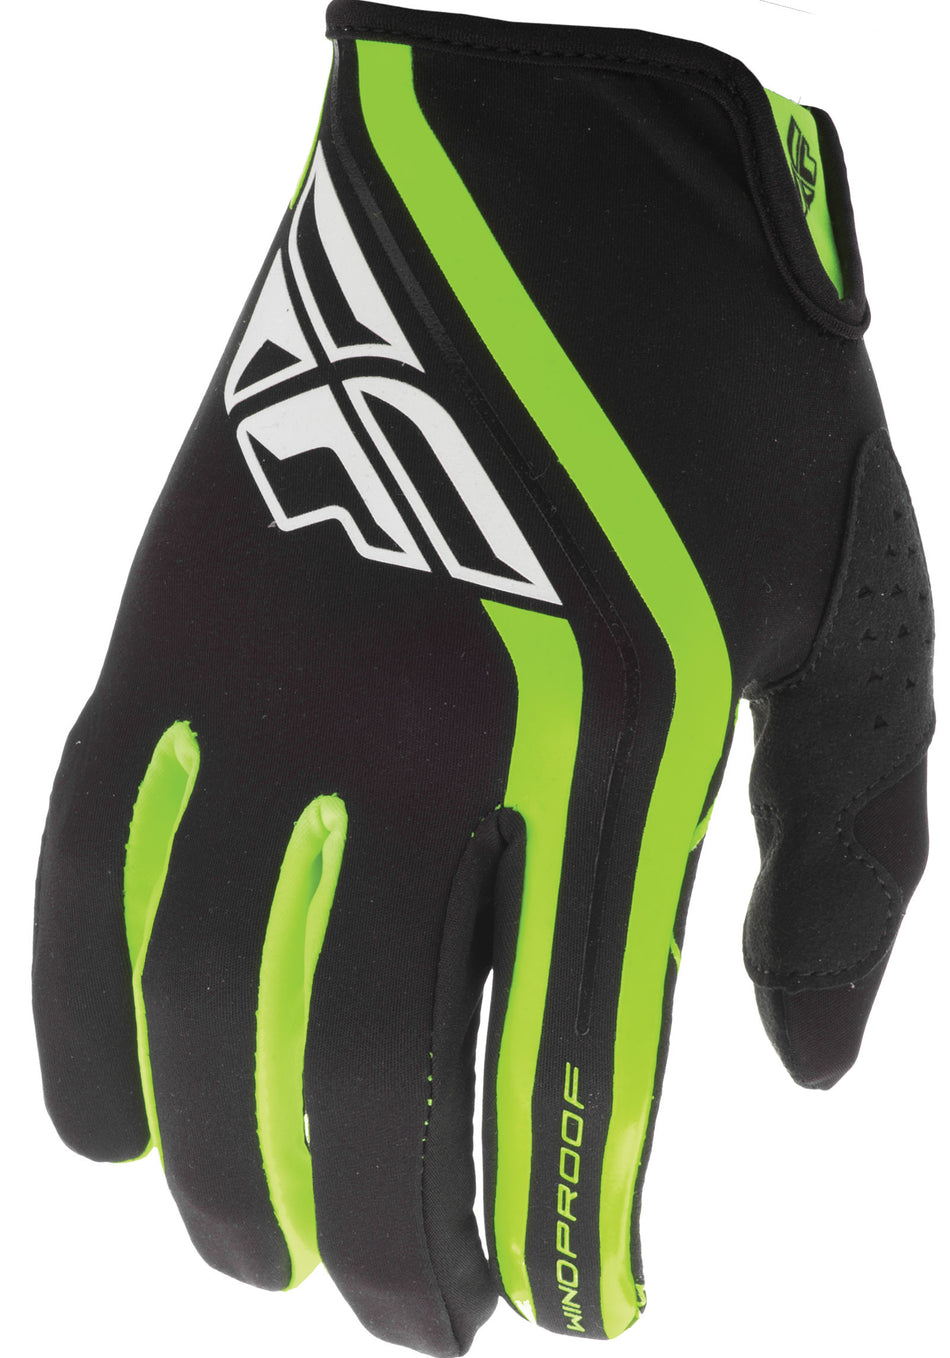 FLY RACING Windproof Gloves Black/Hi-Vis Sz 10 371-14910